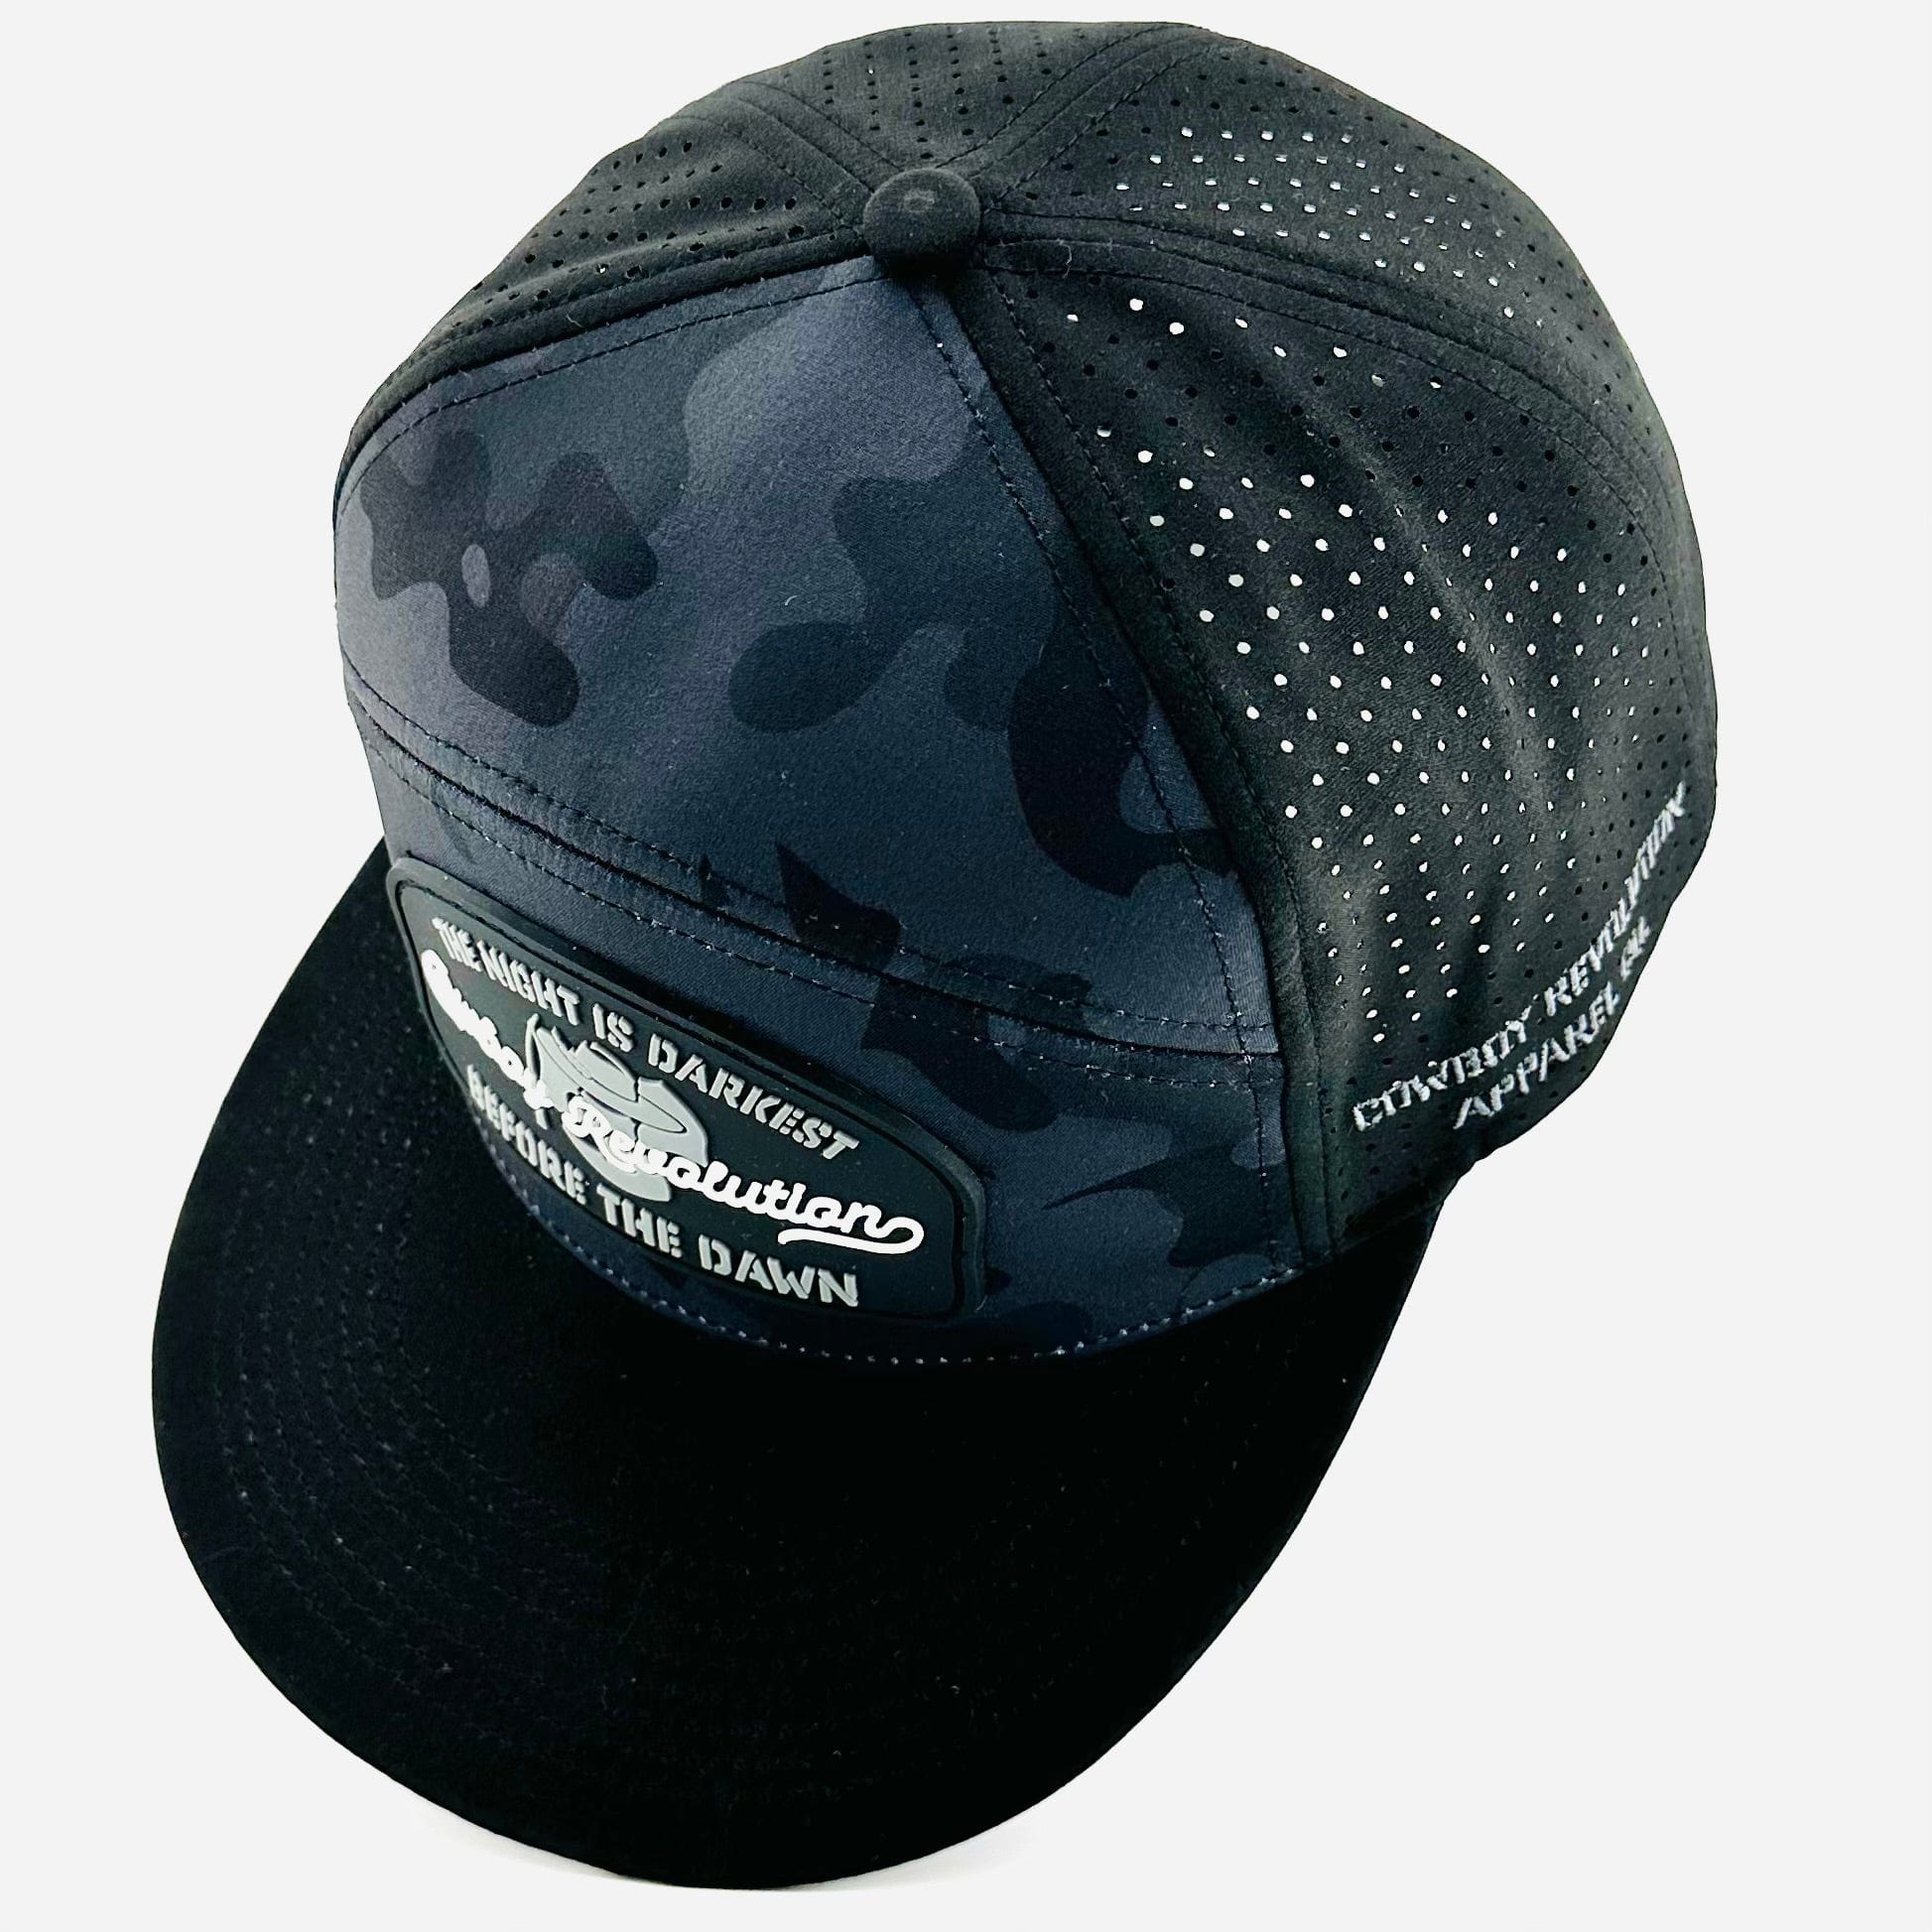 Cowboy Revolution Apparel Co. Hats One Size Fits Most “Before The Dawn” - Cowboy Revolution Dark Camo/Black 6-panel Flatbill Hat